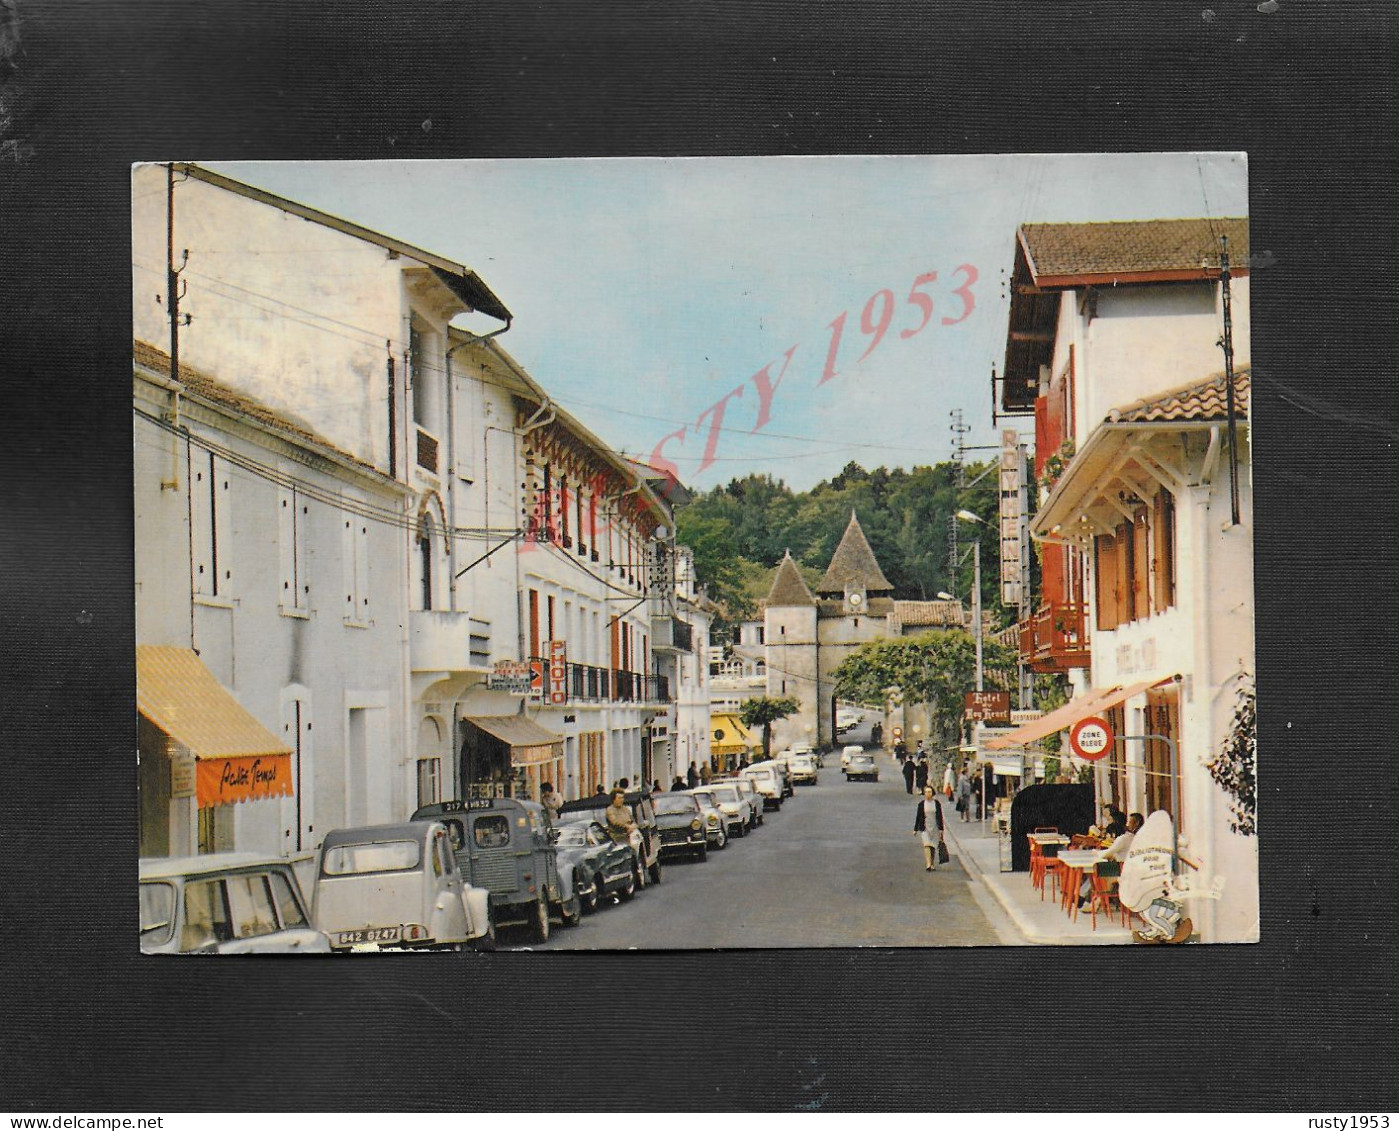 CPSM SUR TIMBRE DE Barbotan-les-thermes, Gers, 32 LA GRANDE RUE & 2 CV & COMMERCE : - Barbotan